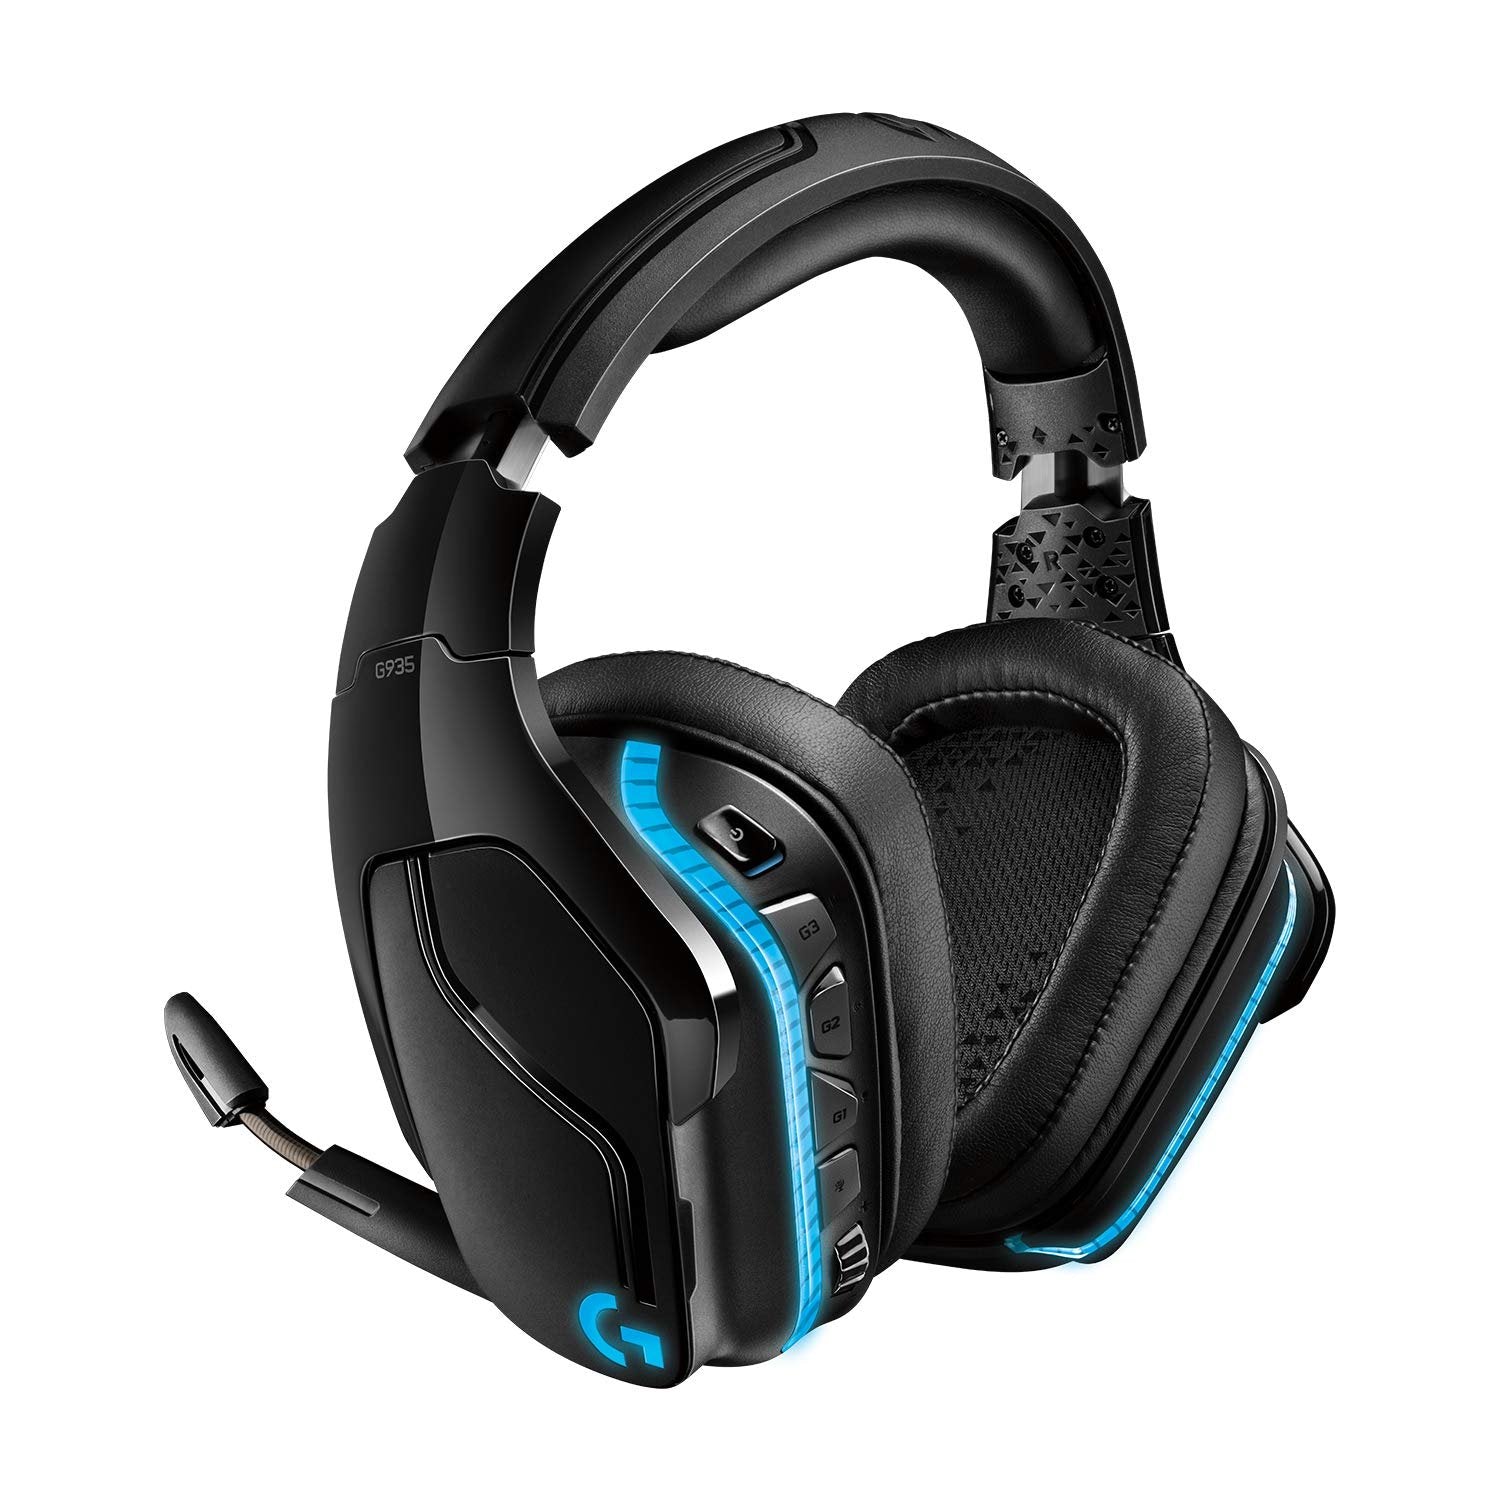 Logitech G935 Wireless Gaming Headset - Black/Blue - DTS:X 7.1 Surround Sound - LIGHTSYNC RGB - One Size